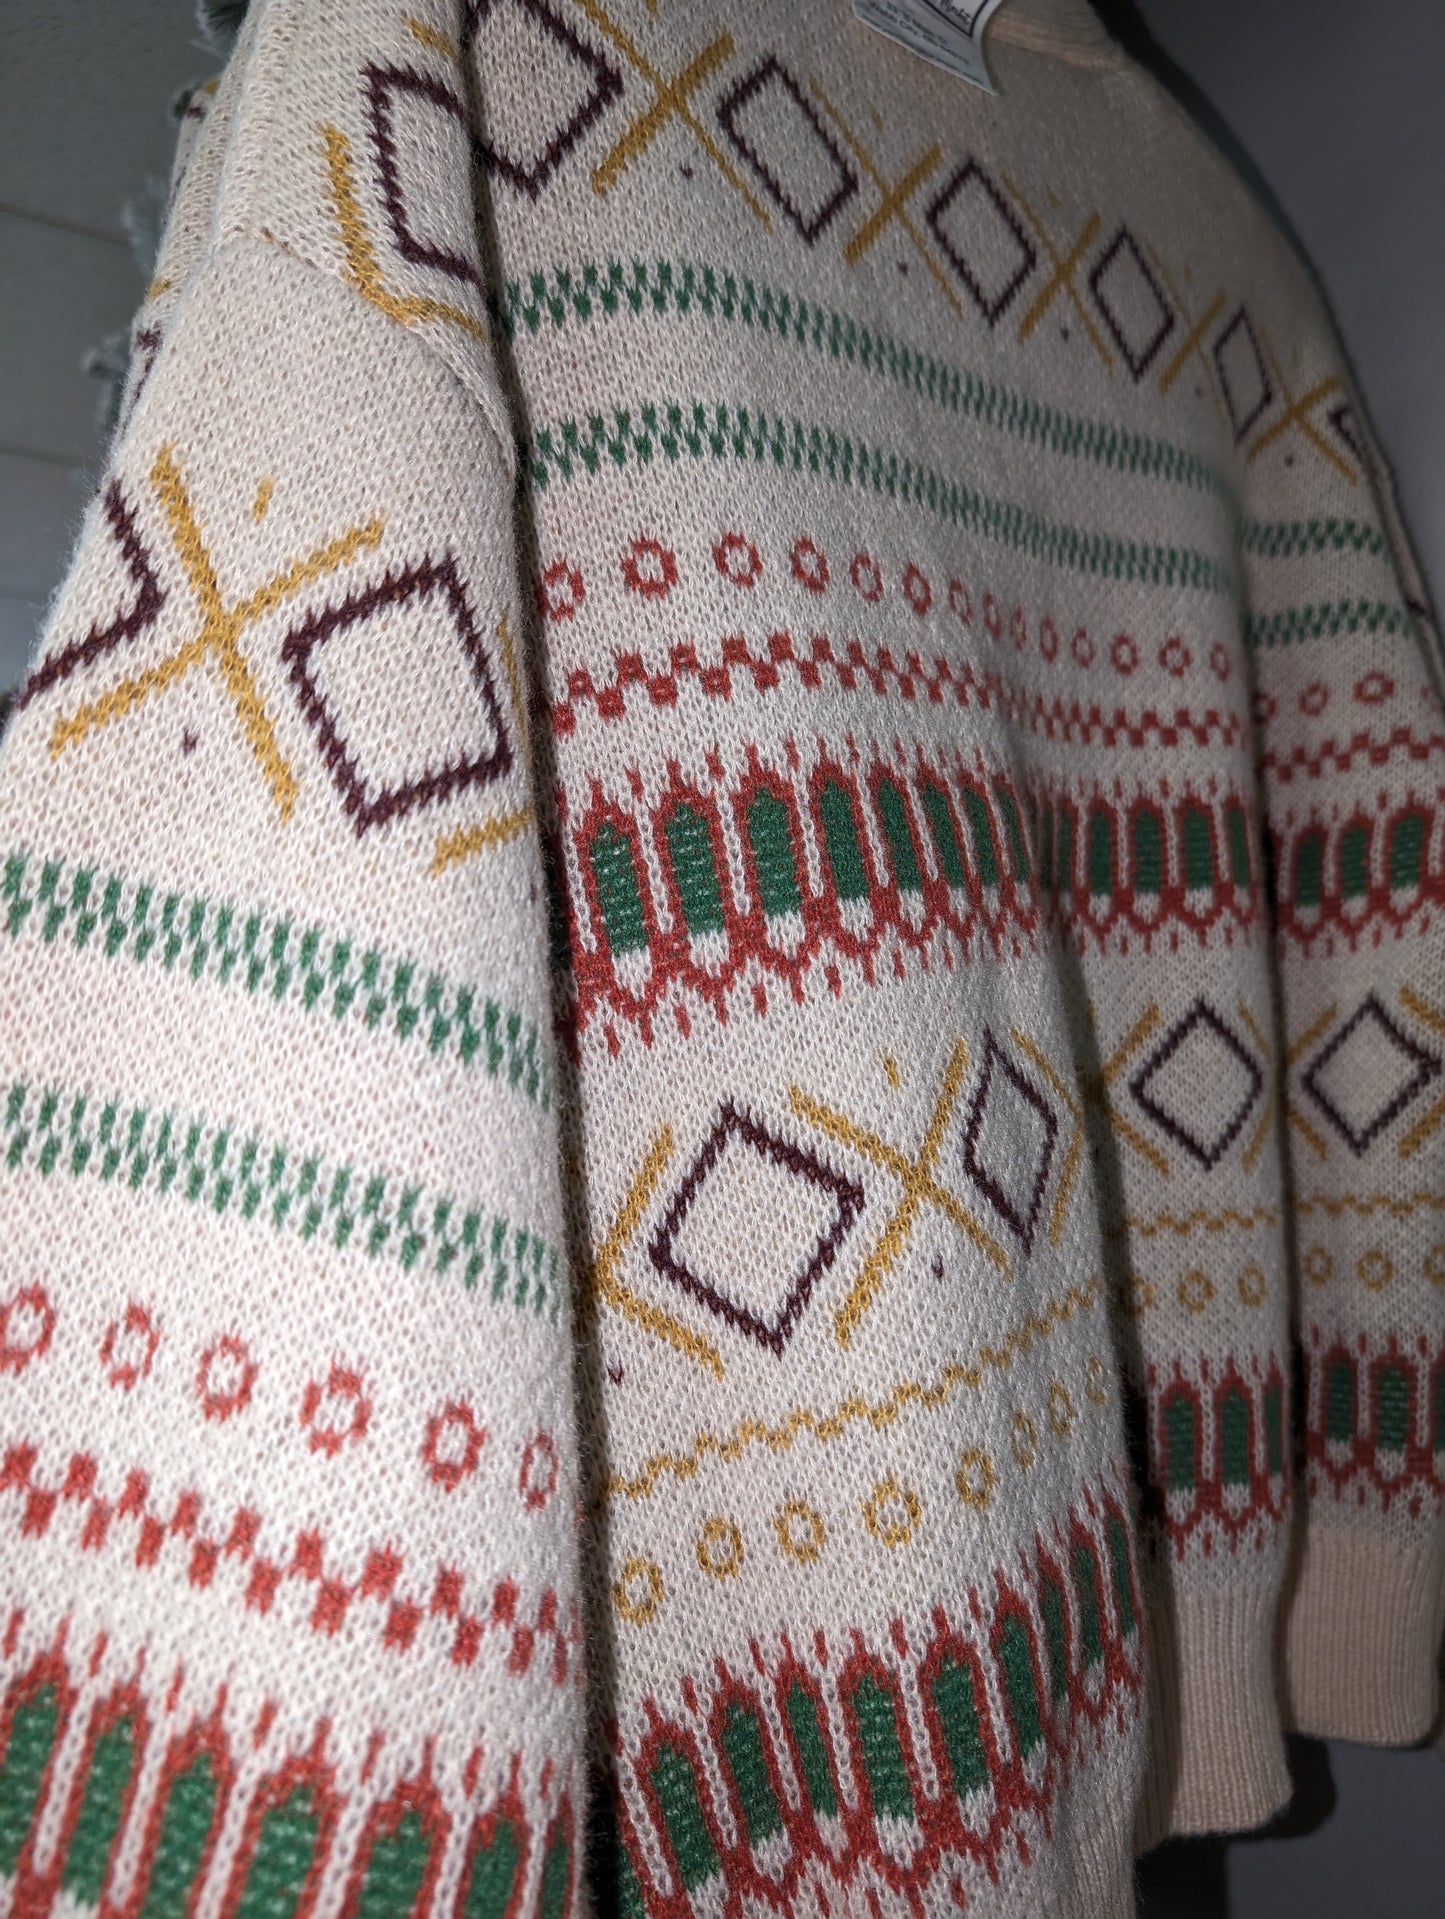 Argyle pattern sweater